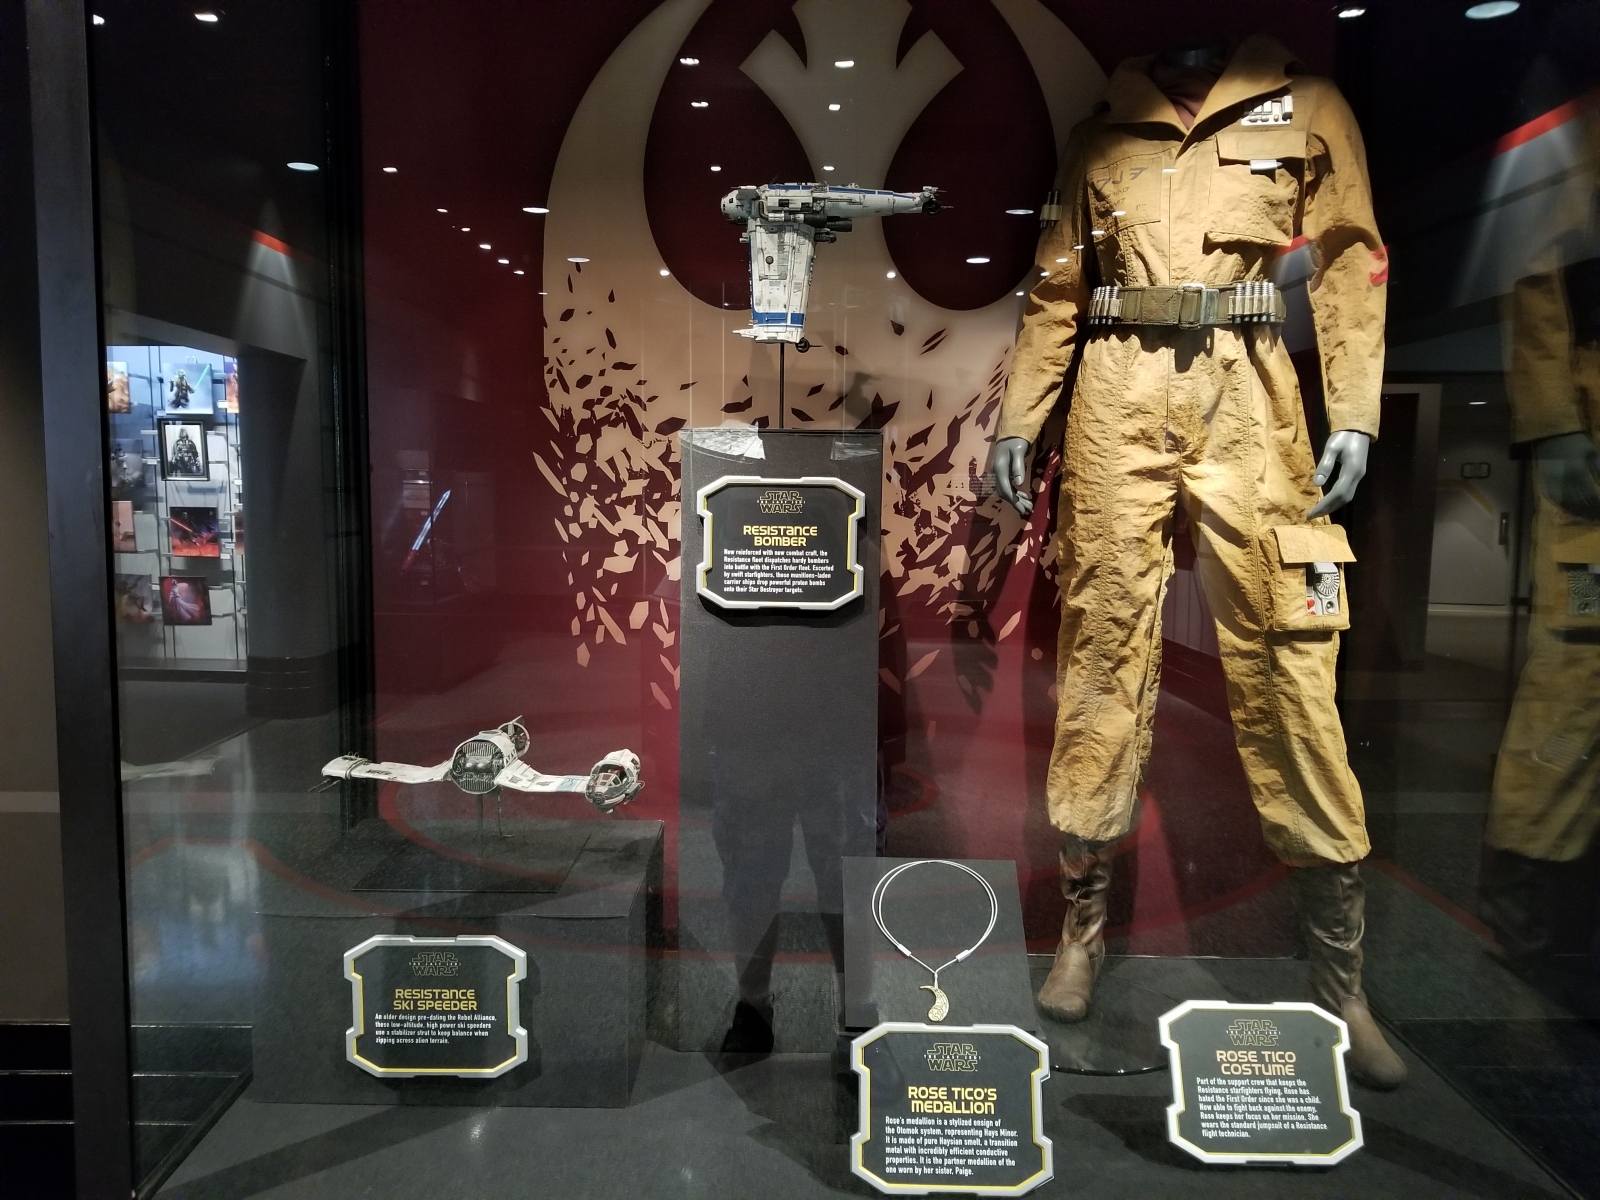 The Last Jedi Resistance exhibit